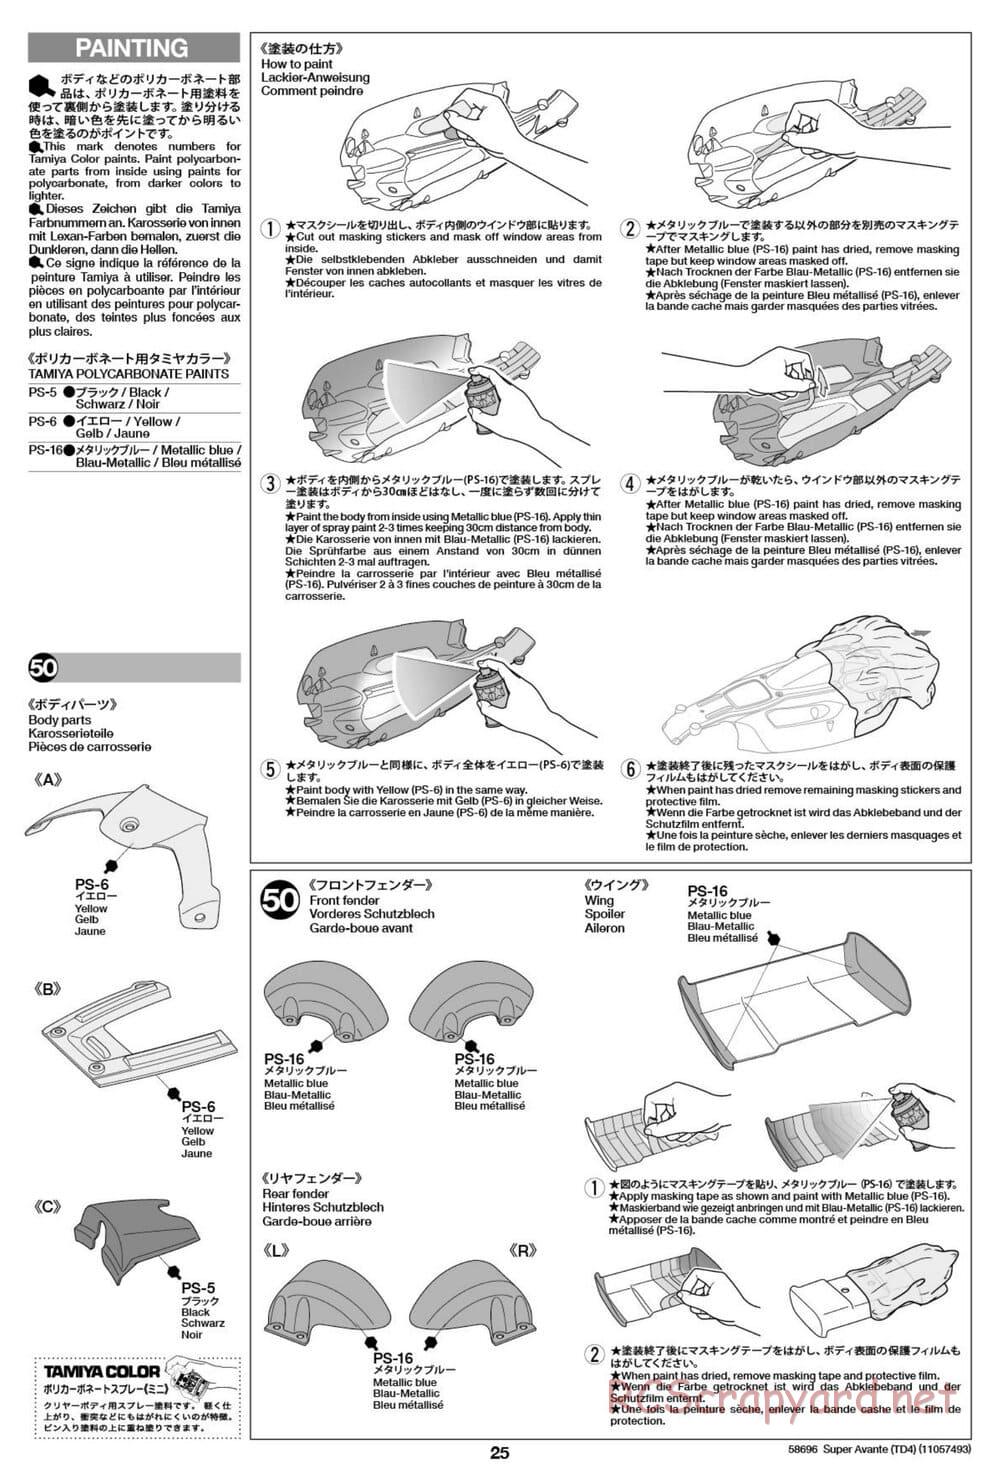 Tamiya - Super Avante - TD4 Chassis - Manual - Page 26